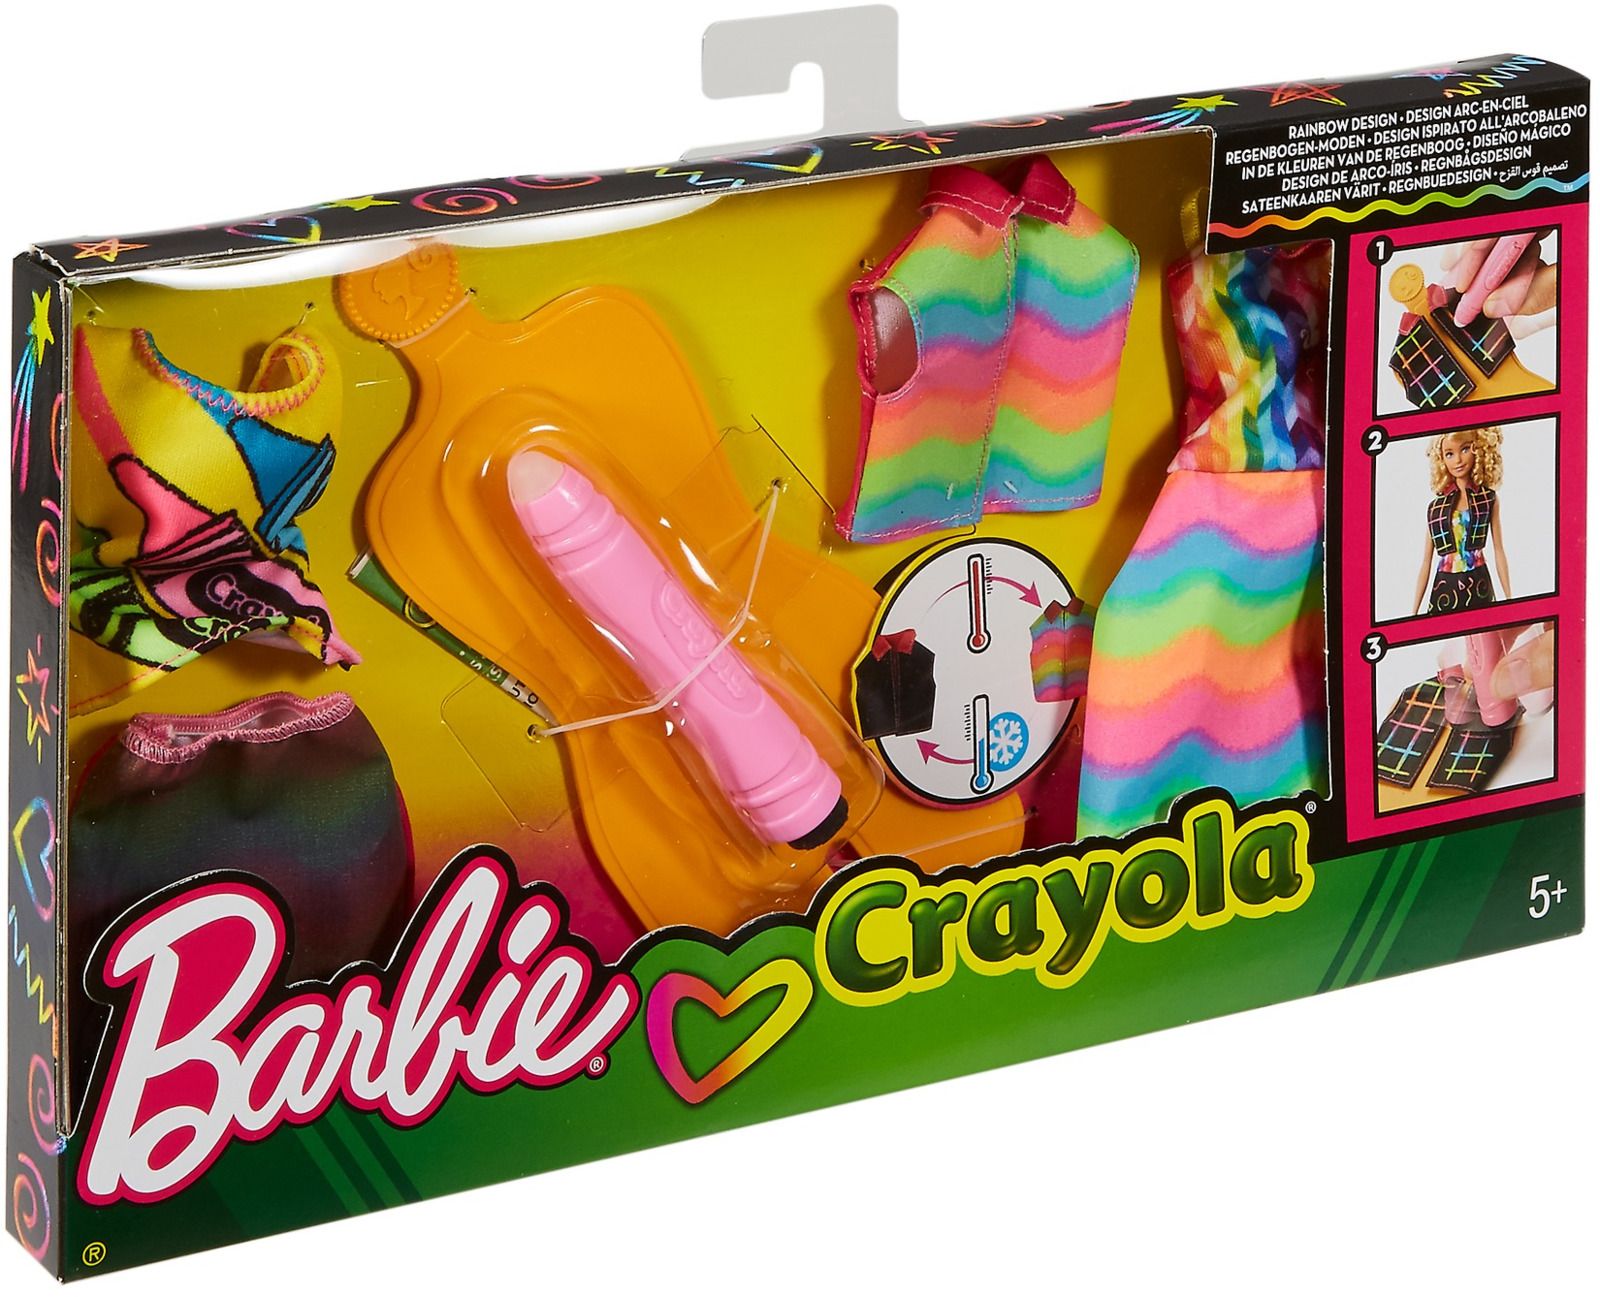 Barbie   Crayola  